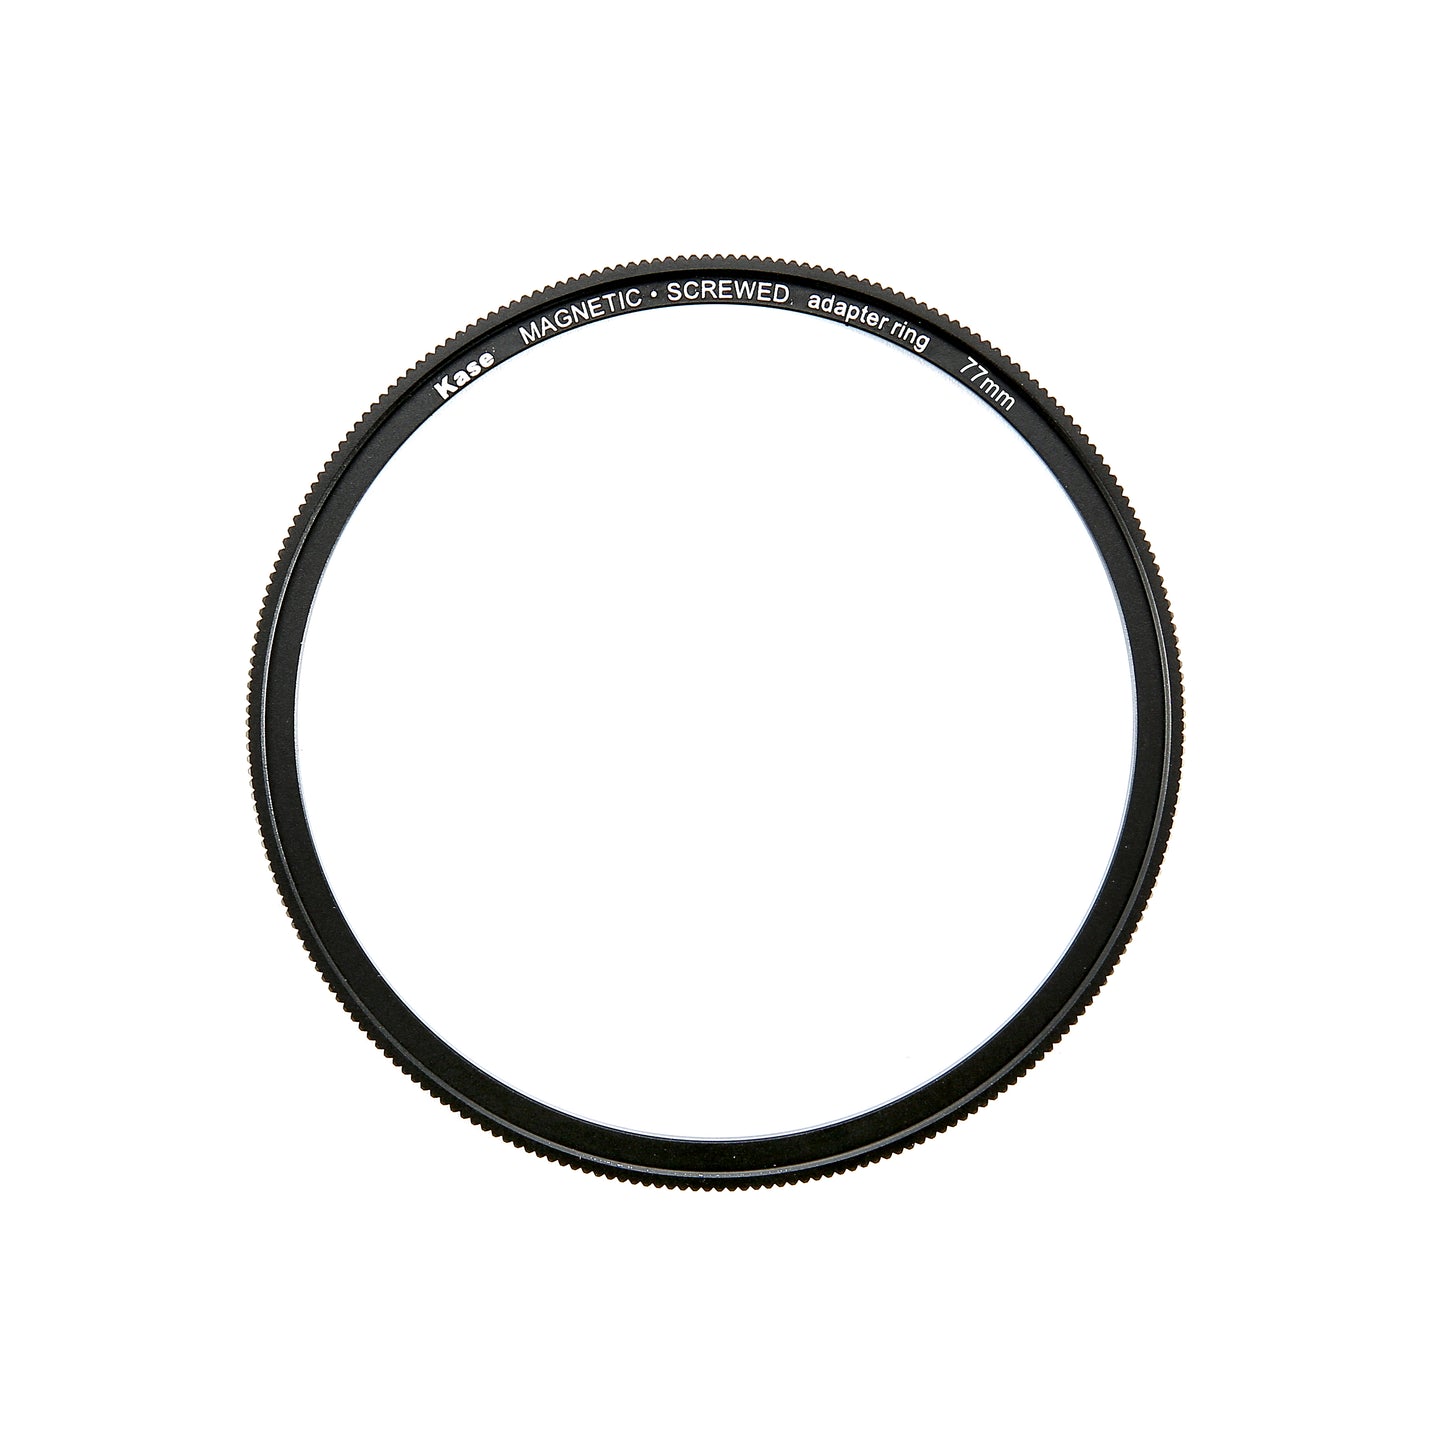 Kase Magnetic Adapter Ring Kit  (magnetic adapter ring+magnetic screwing adapter ring ) 77mm